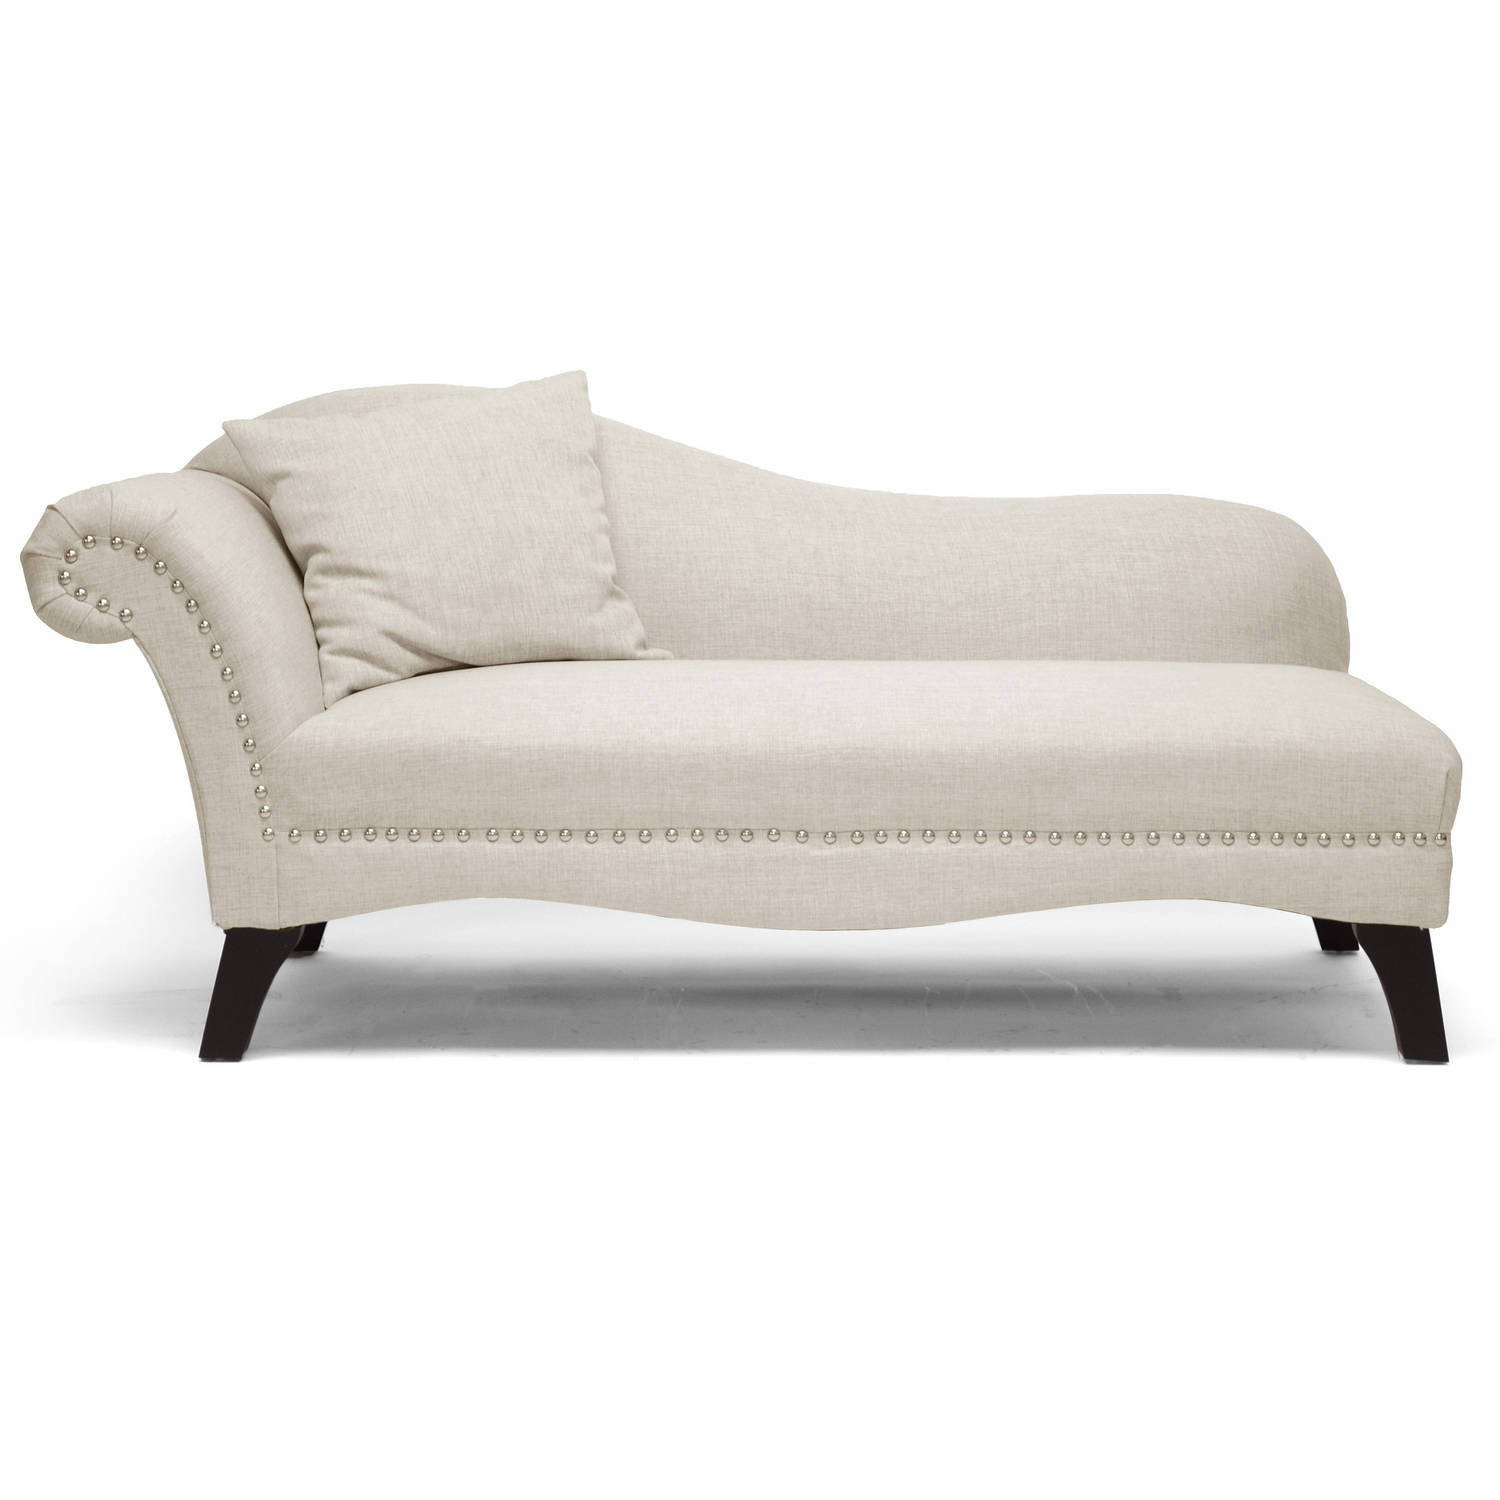 chaise lounge sofa $300+ SMHXNJZ